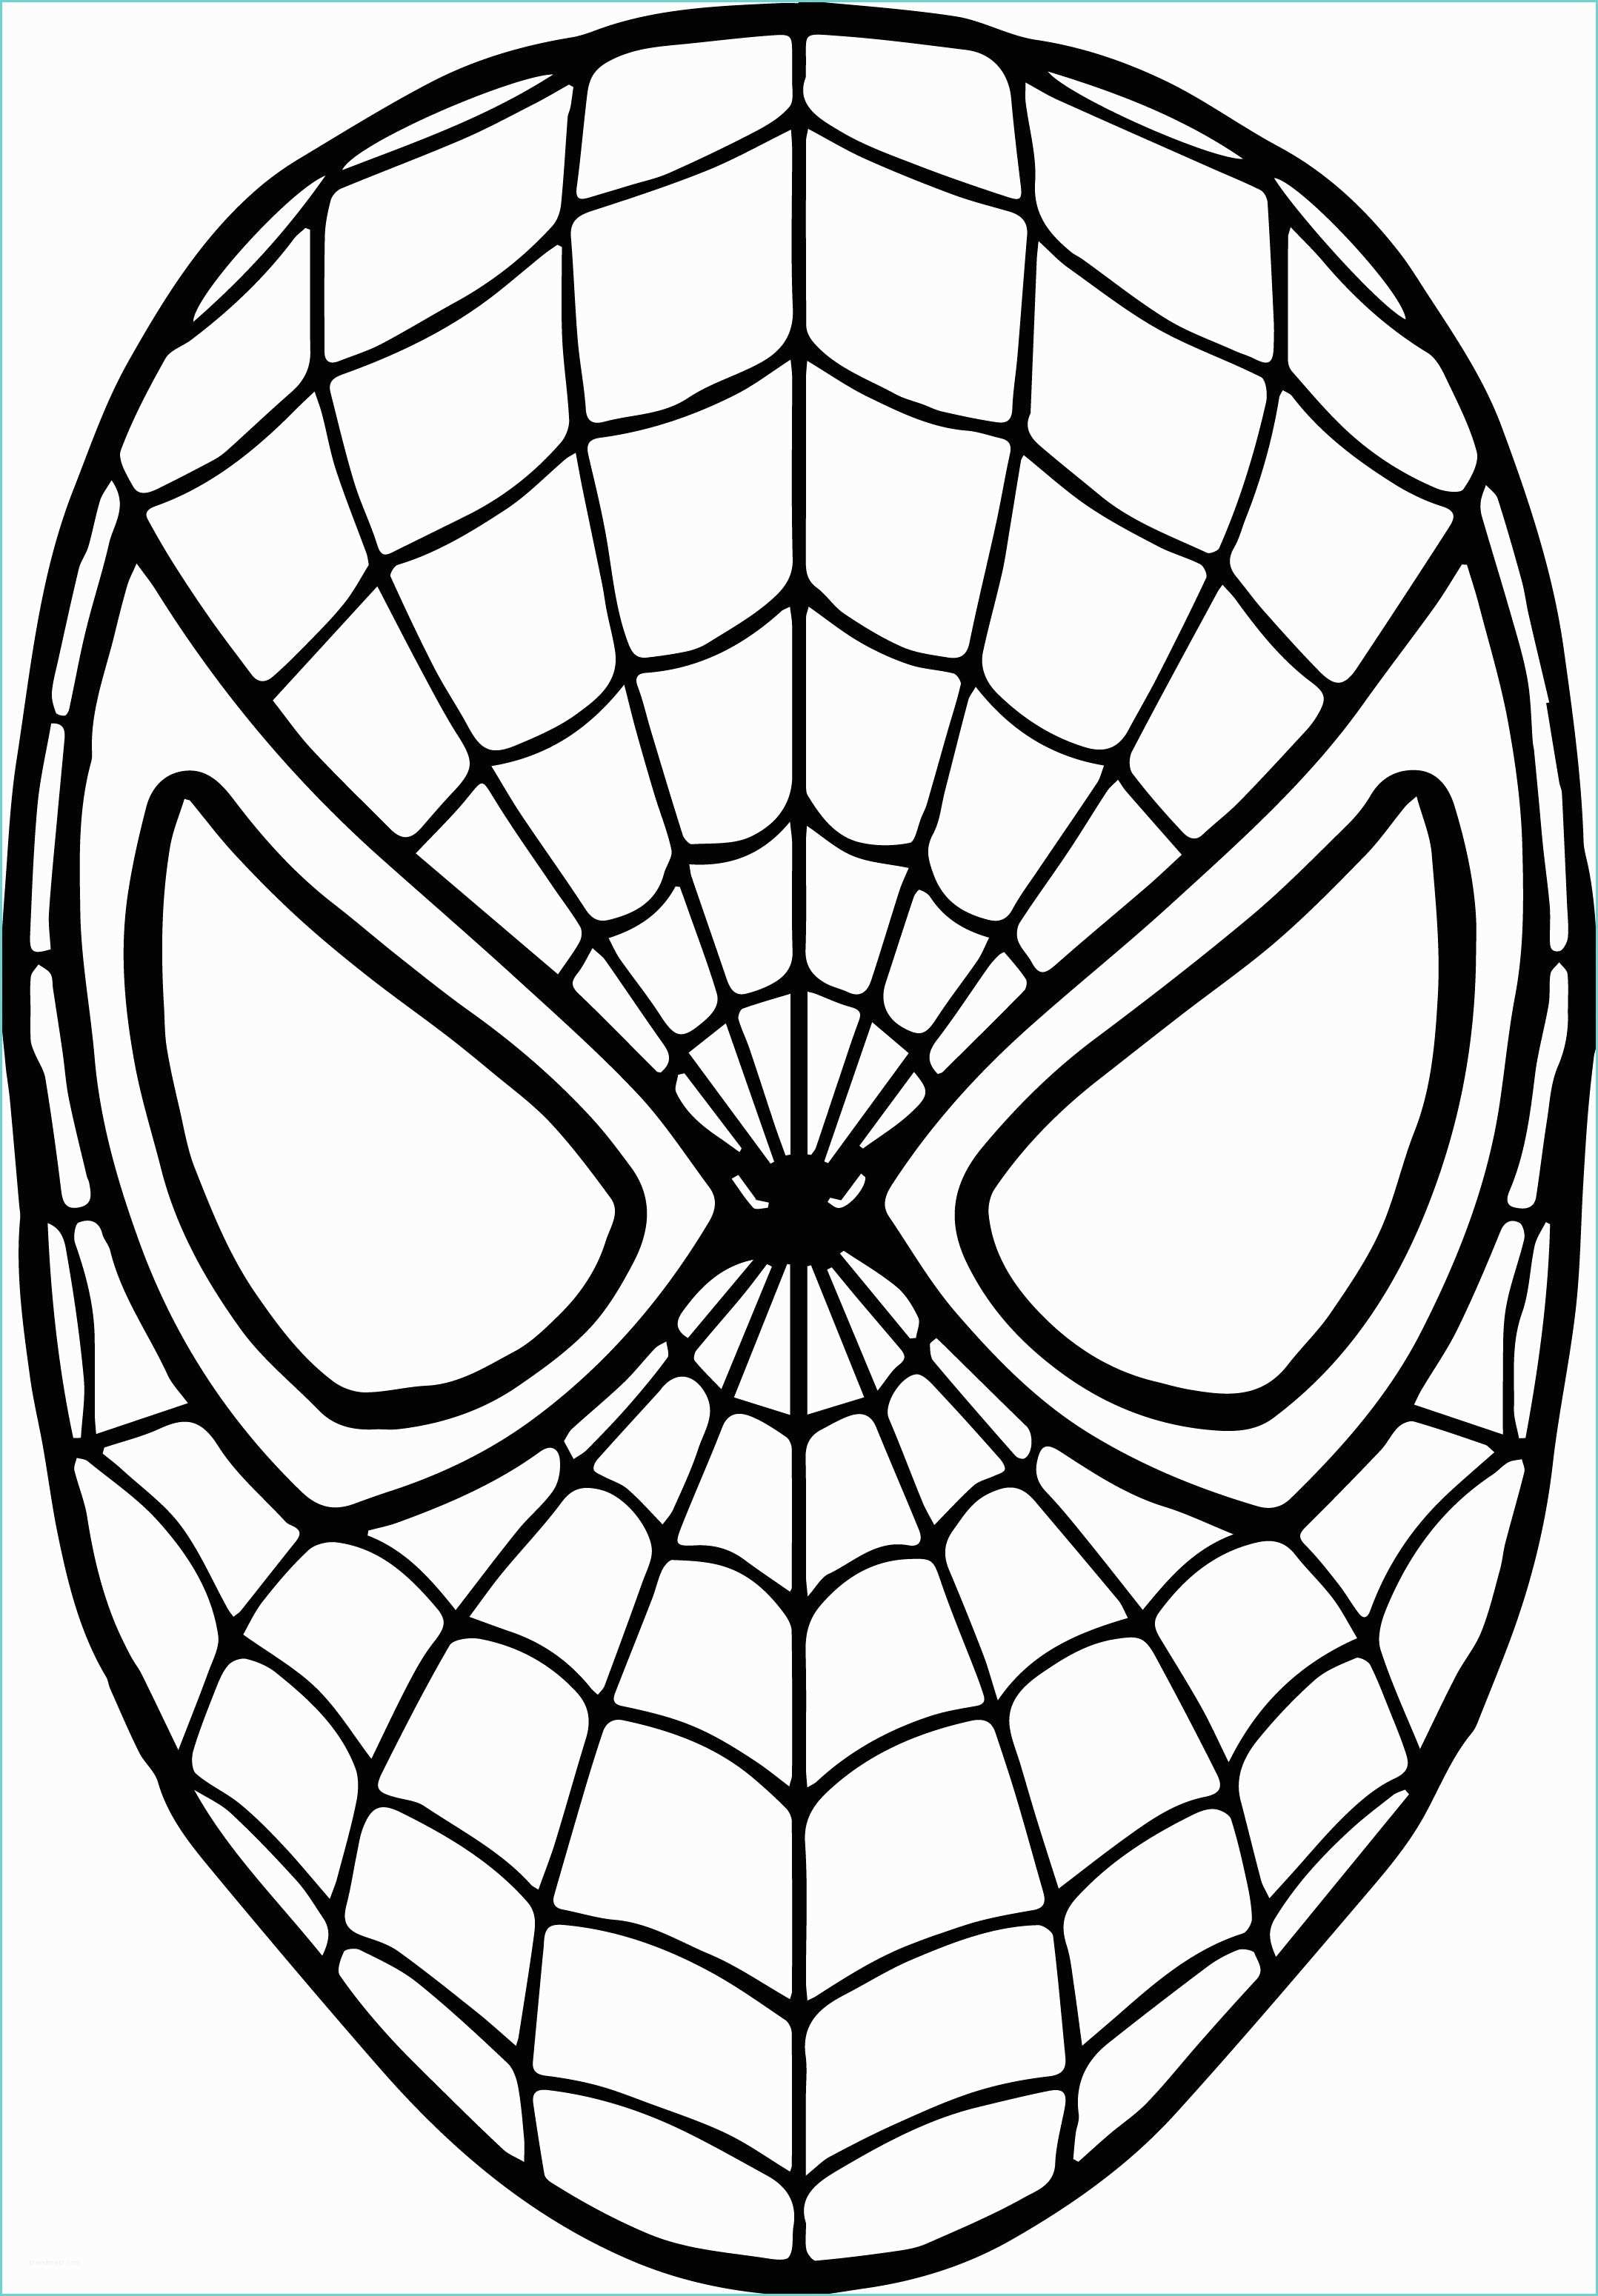 Mask Color De V33 Spiderman Mask Coloring Page Coloring Pages